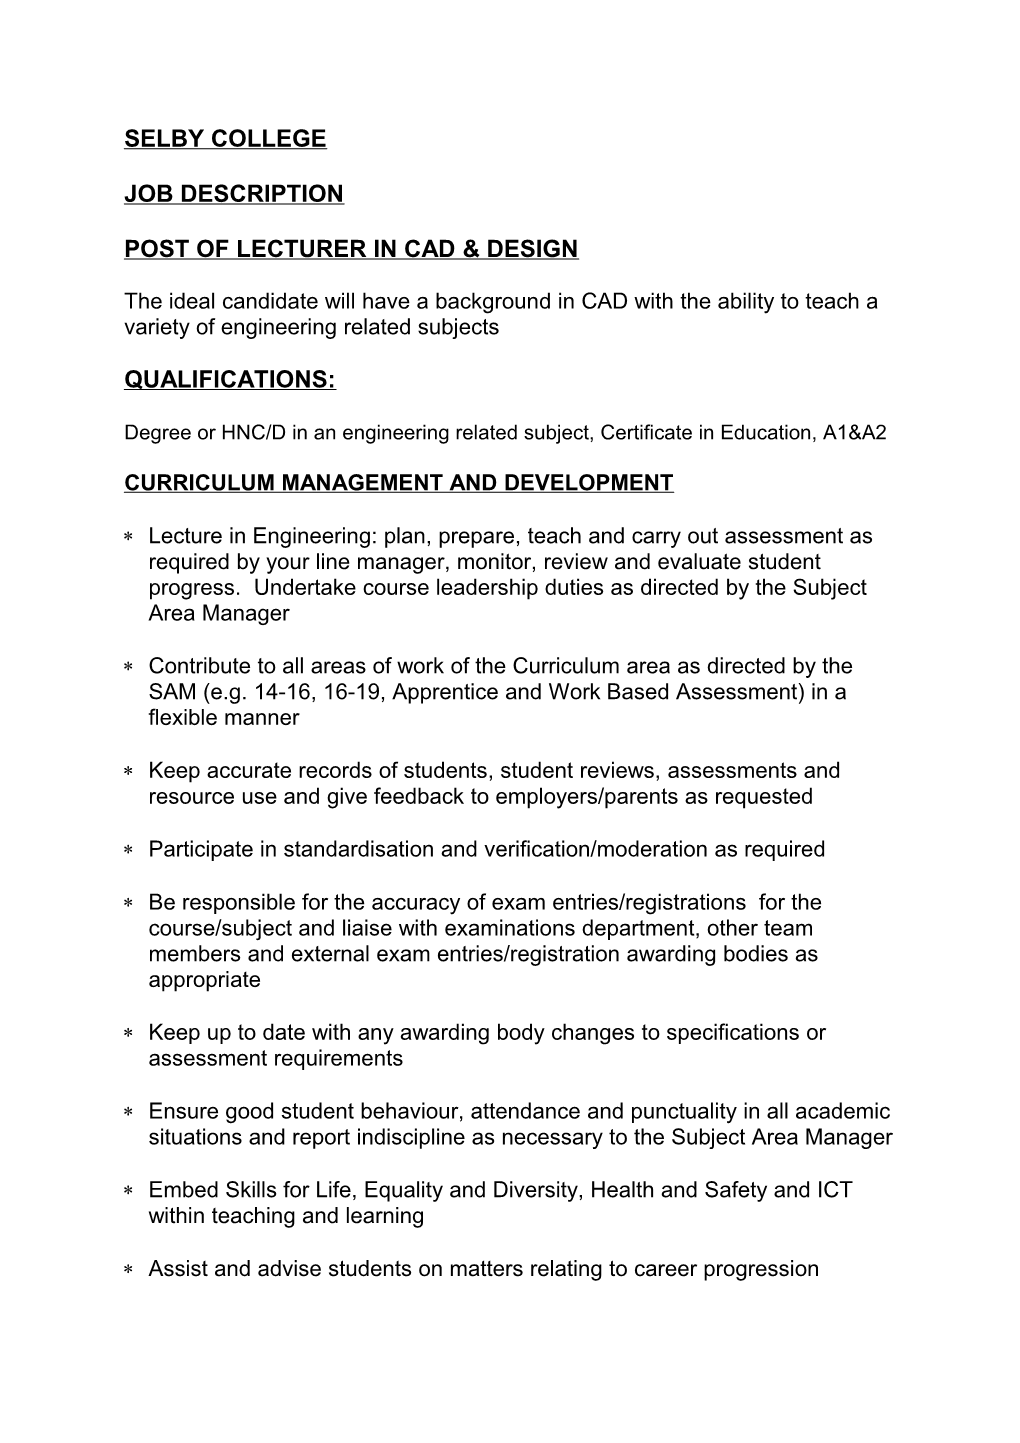 Post of Lecturer in Cad & Design